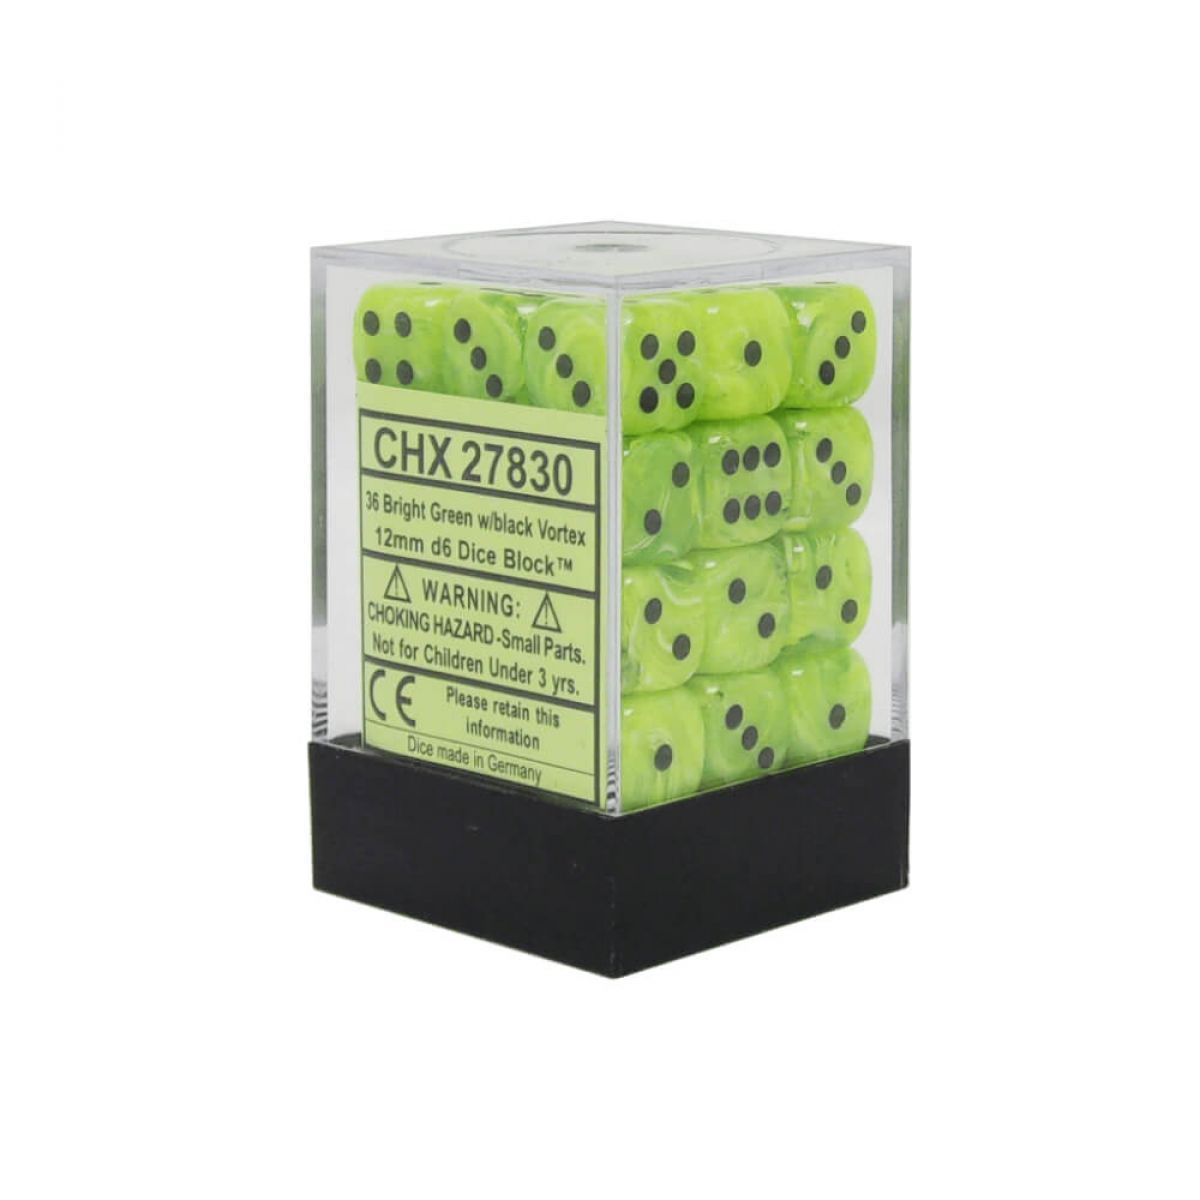 CHX 27830 Vortex Bright Green/black 12mm D6 36-Dice Set